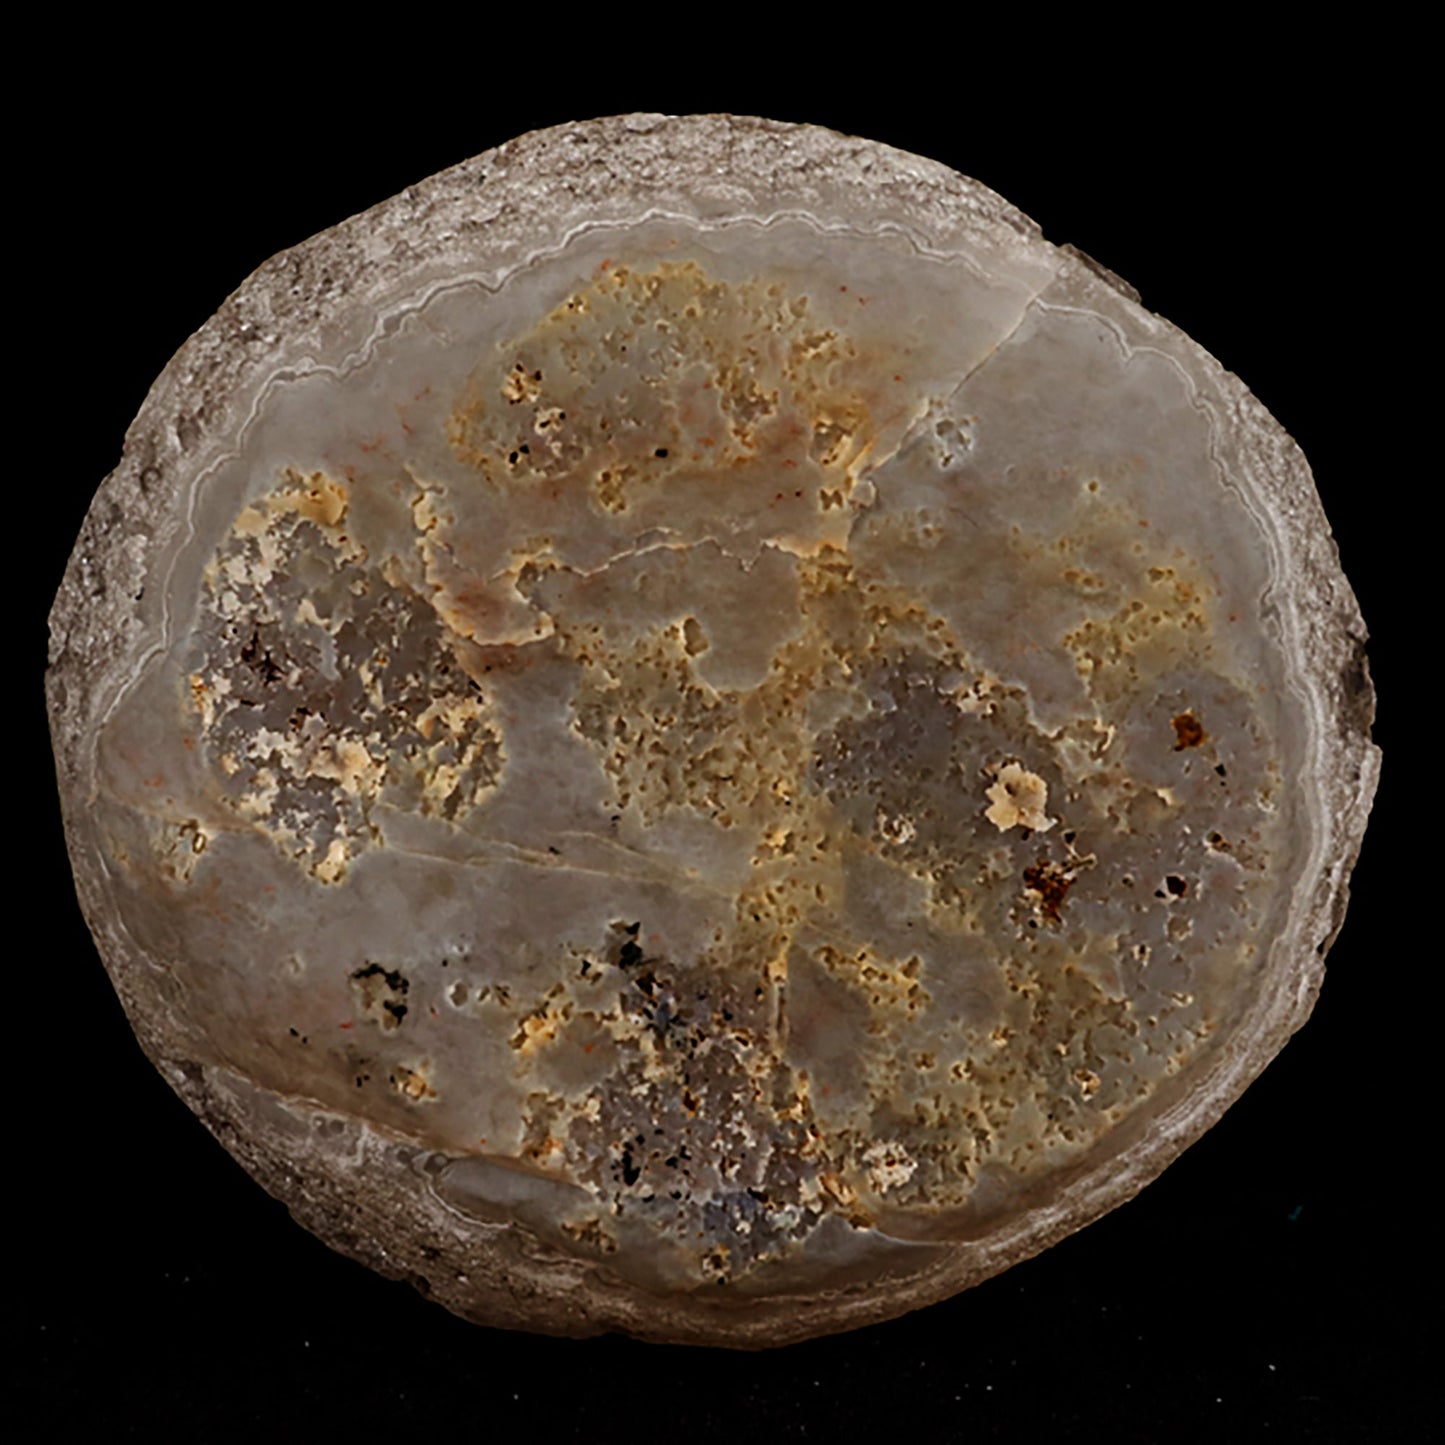 Fluorite ball on MM Quartz Natural Mineral Specimen # B 5388 Fluorite Superb Minerals 